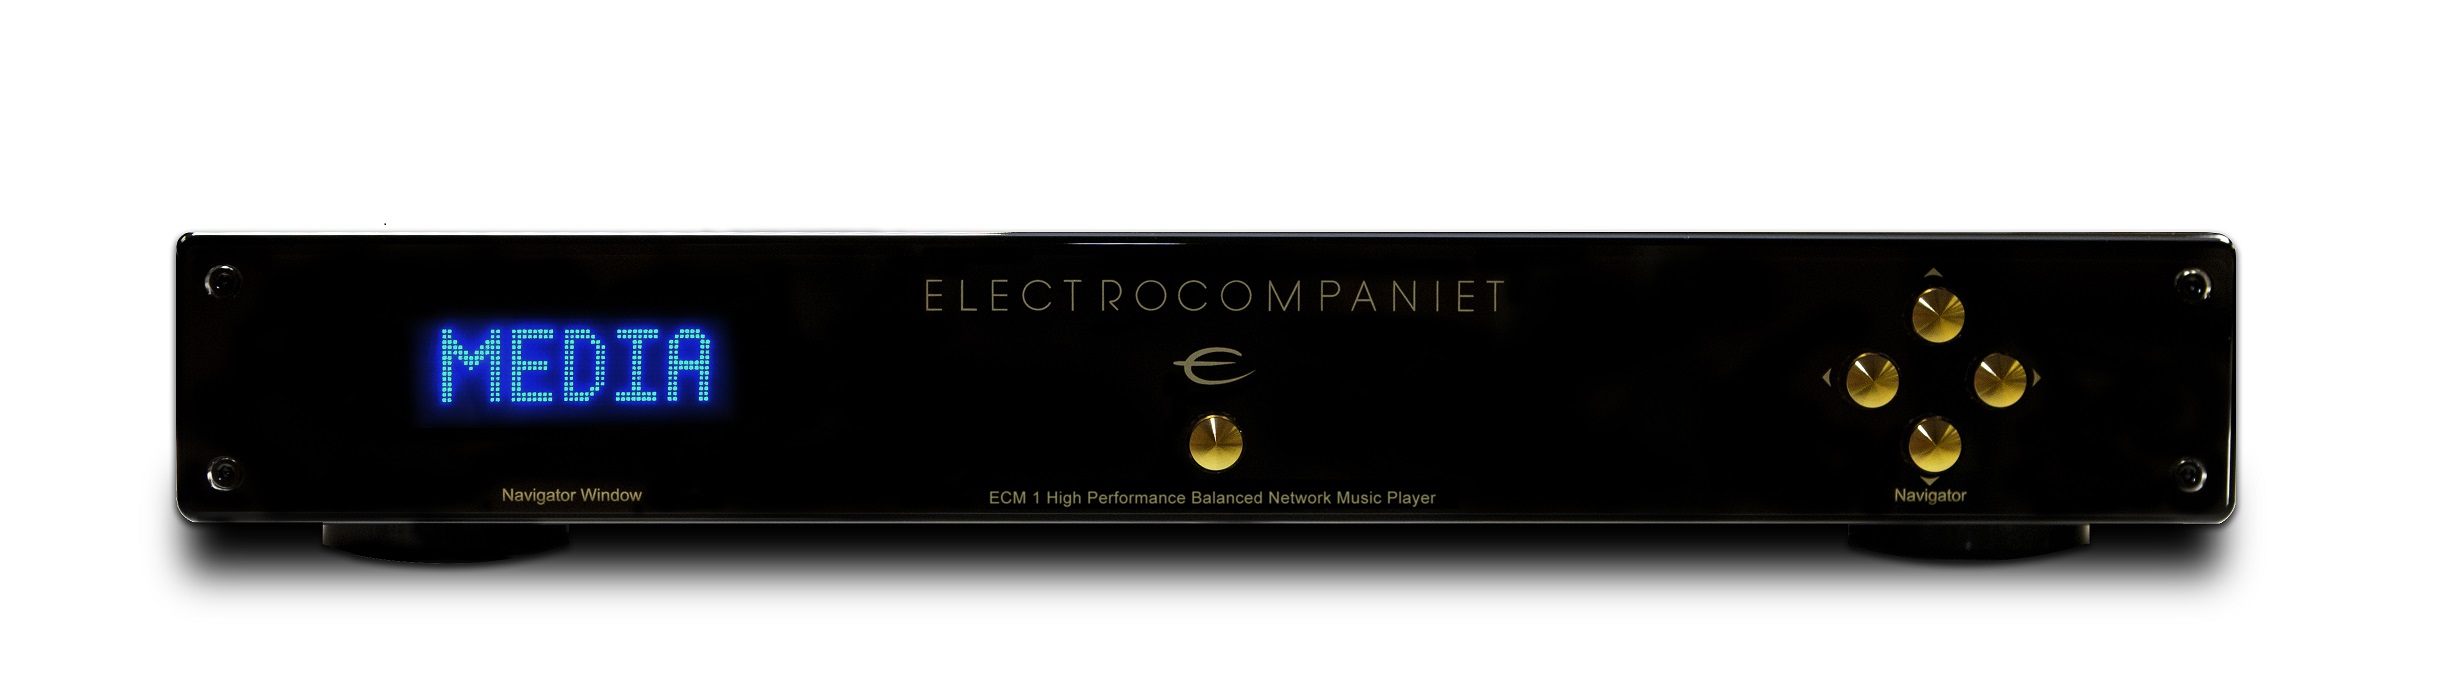 Electrocompaniet ECM-1 Audio-Streamer ECM-1 